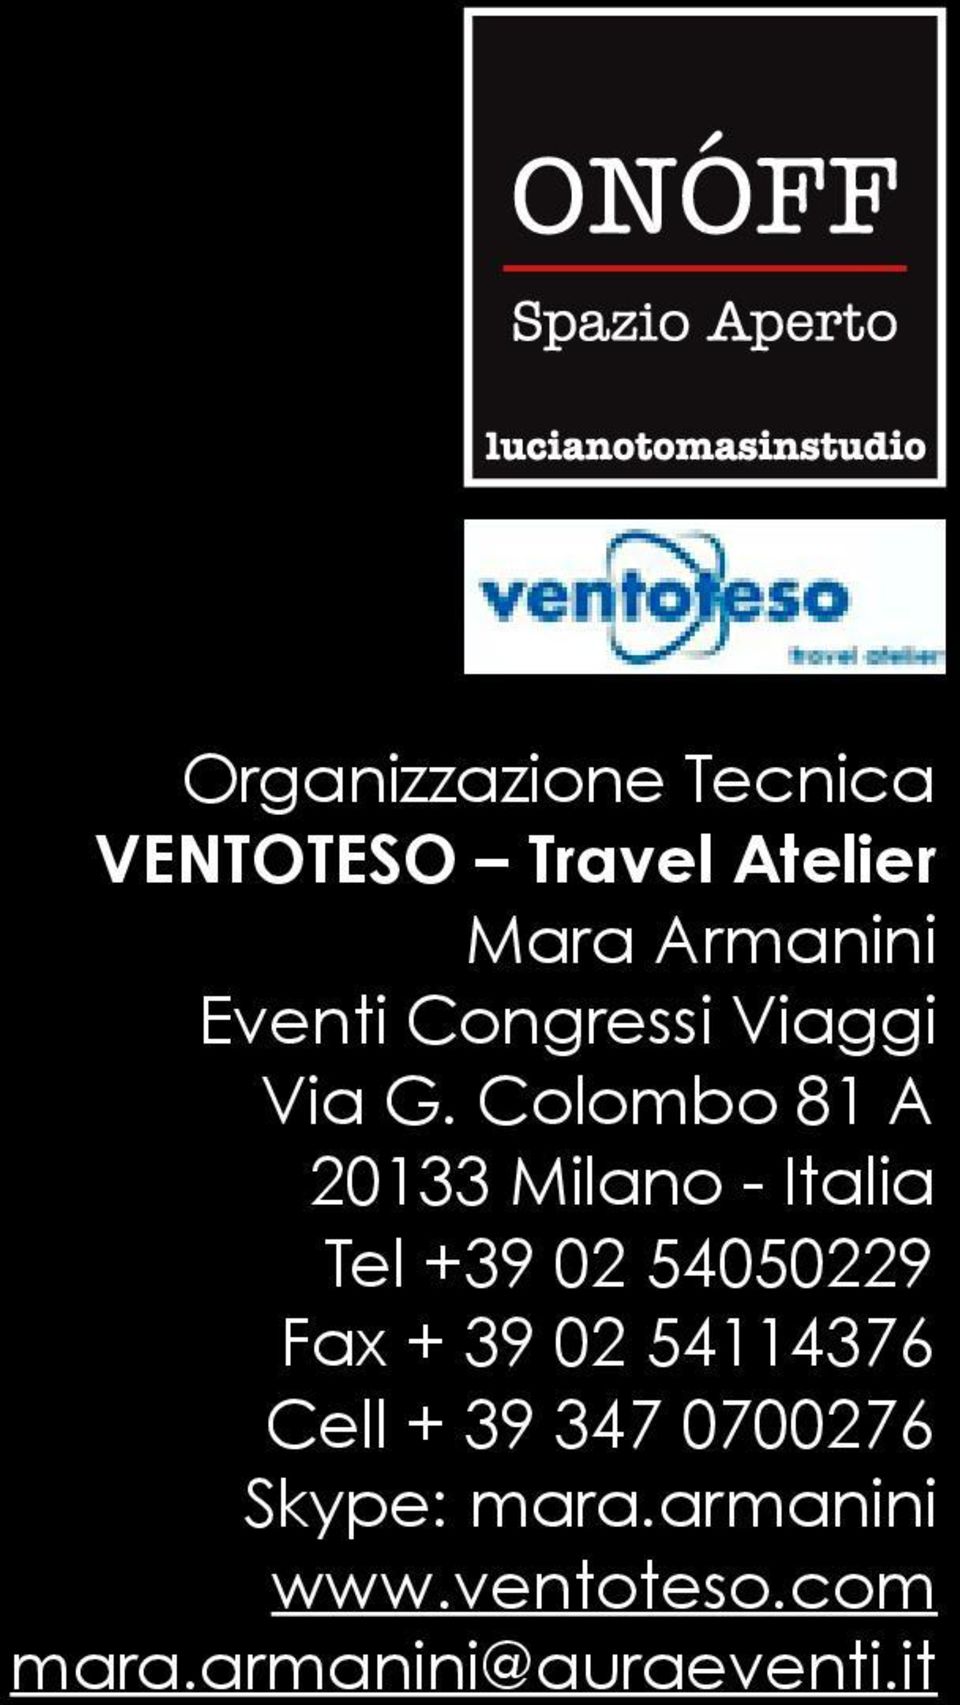 Colombo 81 A 20133 Milano - Italia Tel +39 02 54050229 Fax + 39